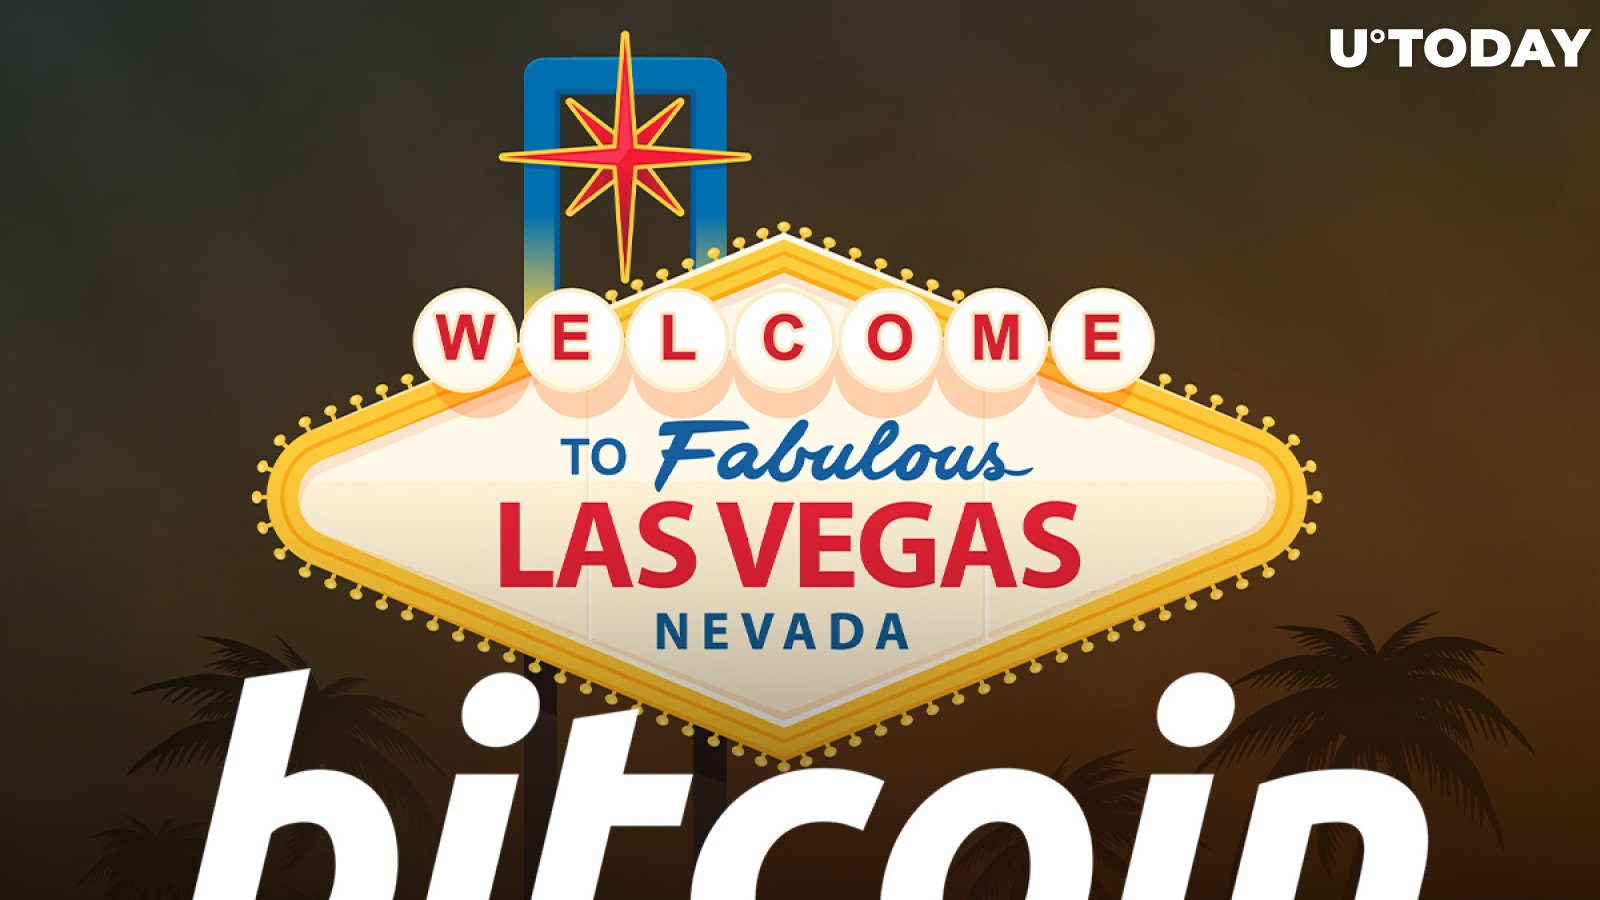 Major Las Vegas Strip Club to Start Accepting Bitcoin via Lightning Network